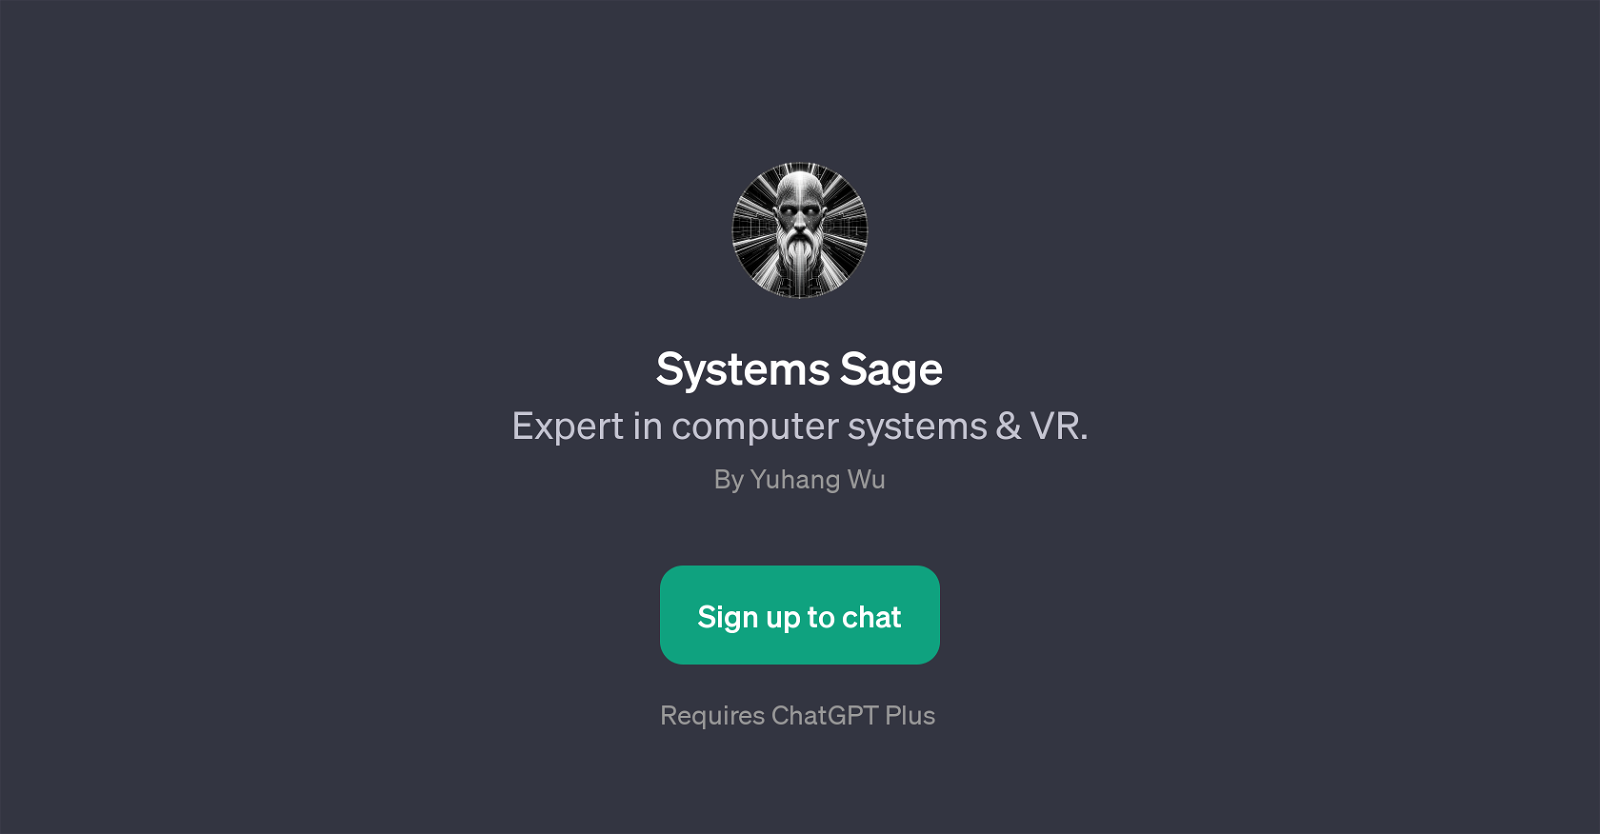 Systems Sage website